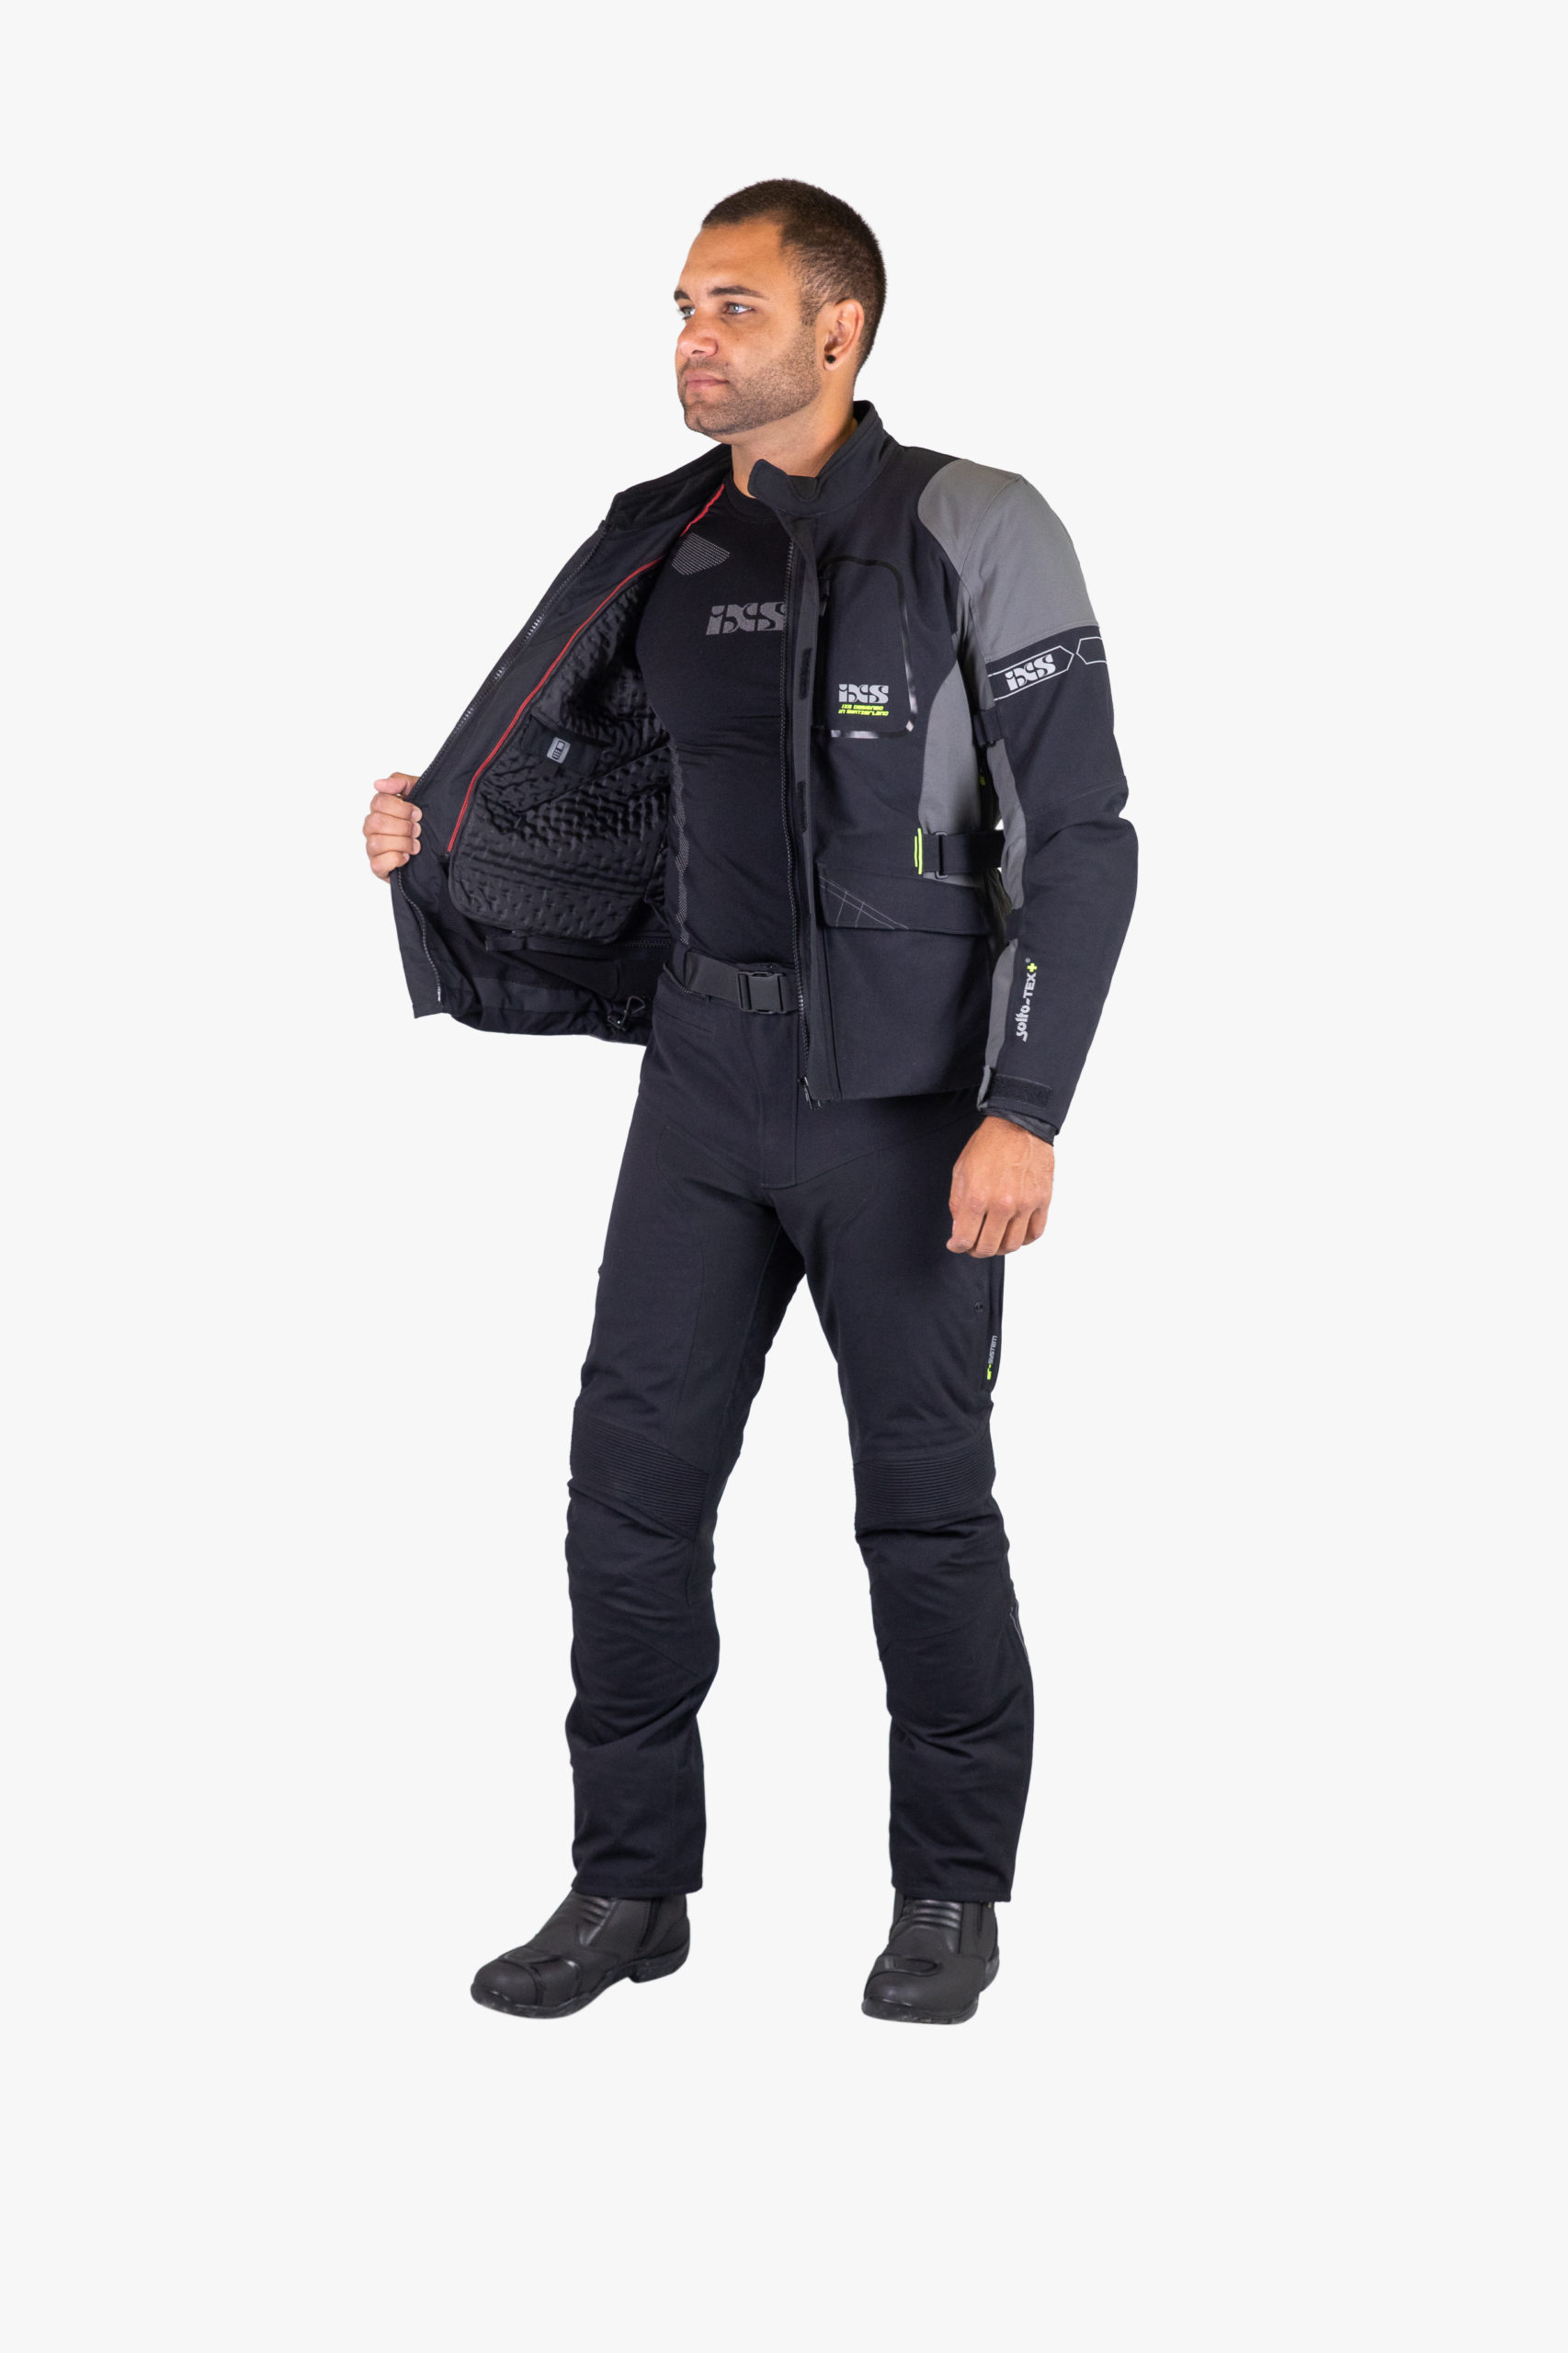 The iXS Tour Jacket Laminat-ST Plus, available for both men and women